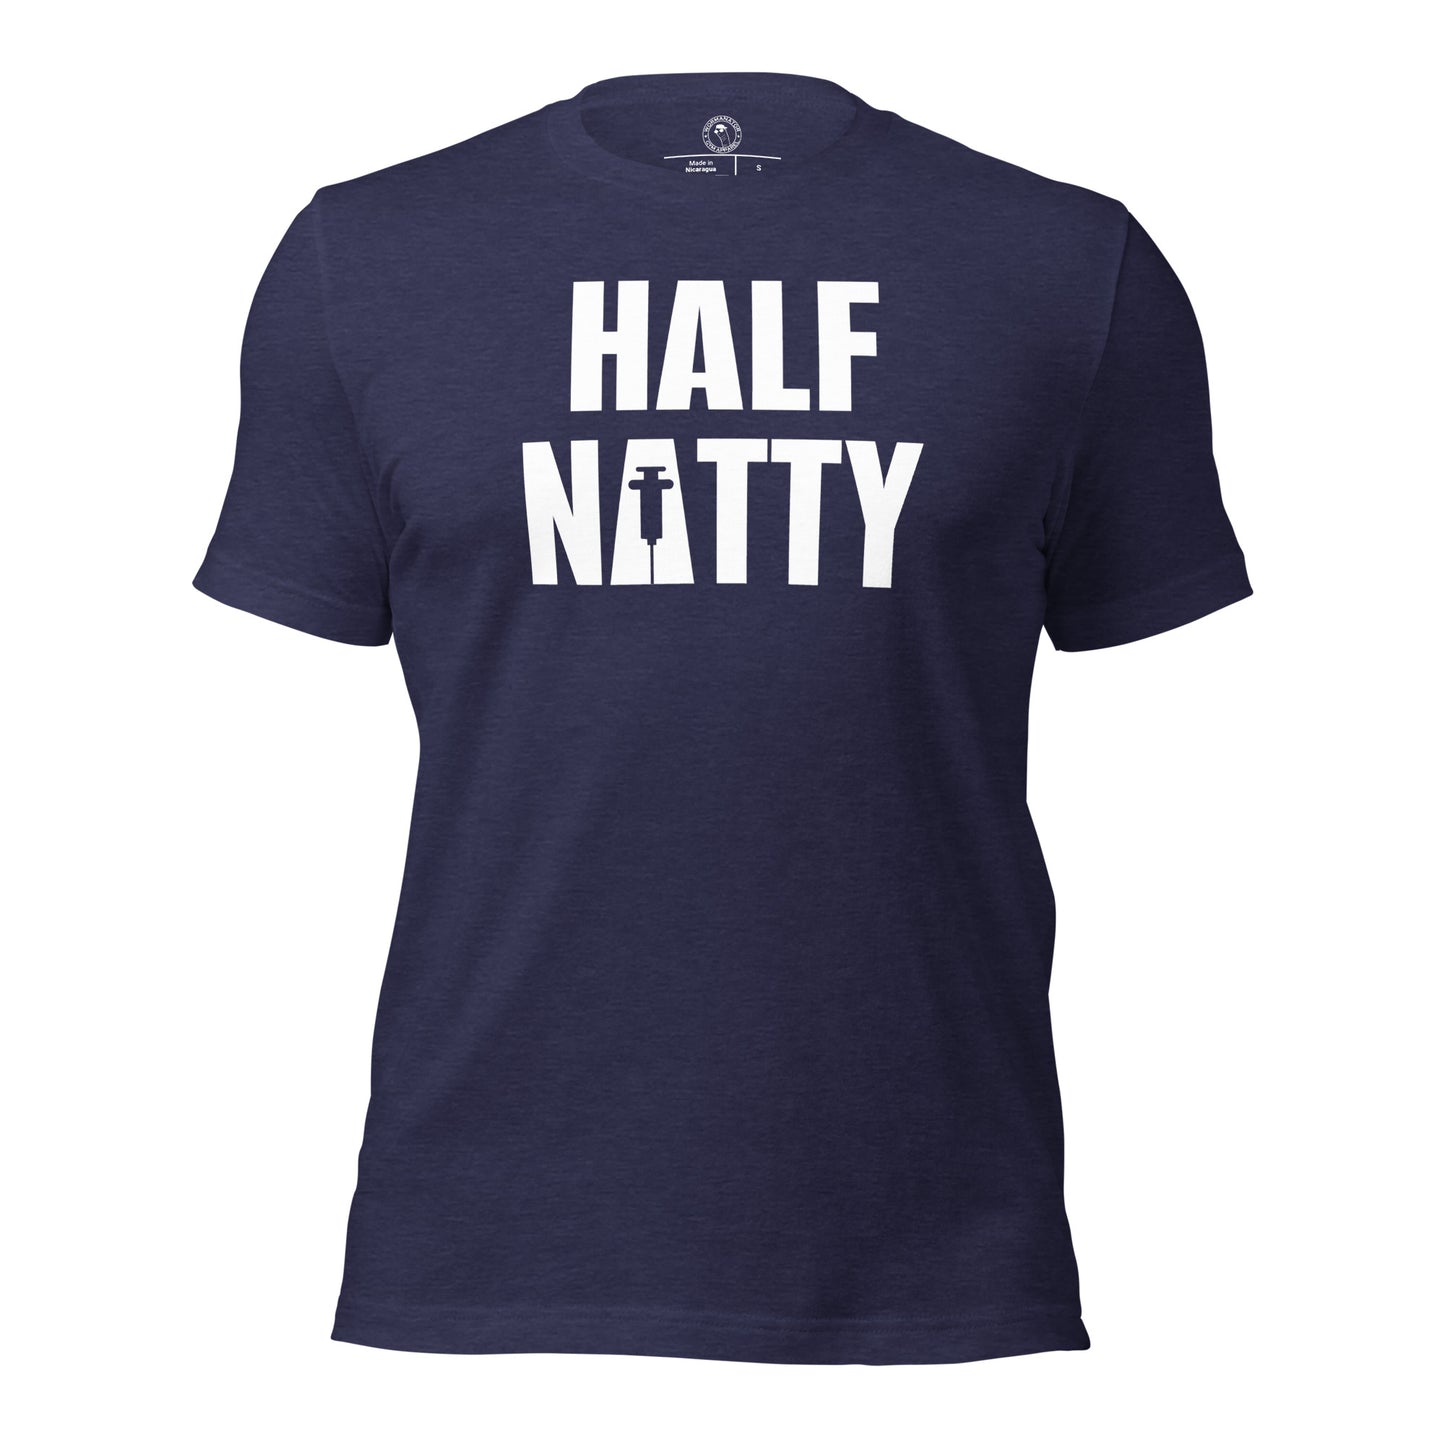 Half Natty T-Shirt in Heather Midnight Navy